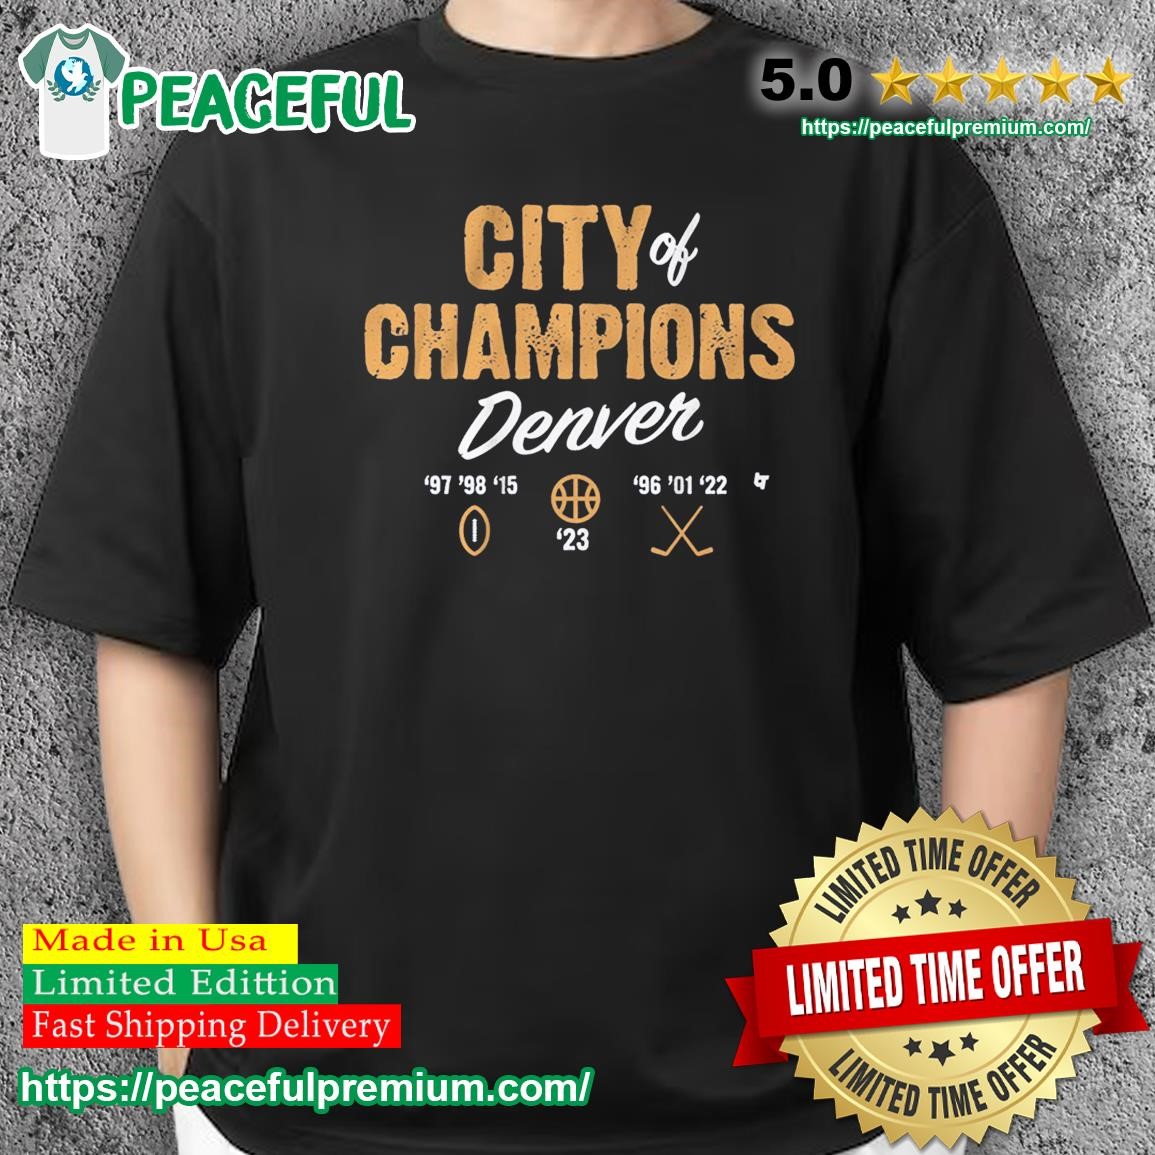 Green Bay Packers City 2019 NFC North Division Champions shirt